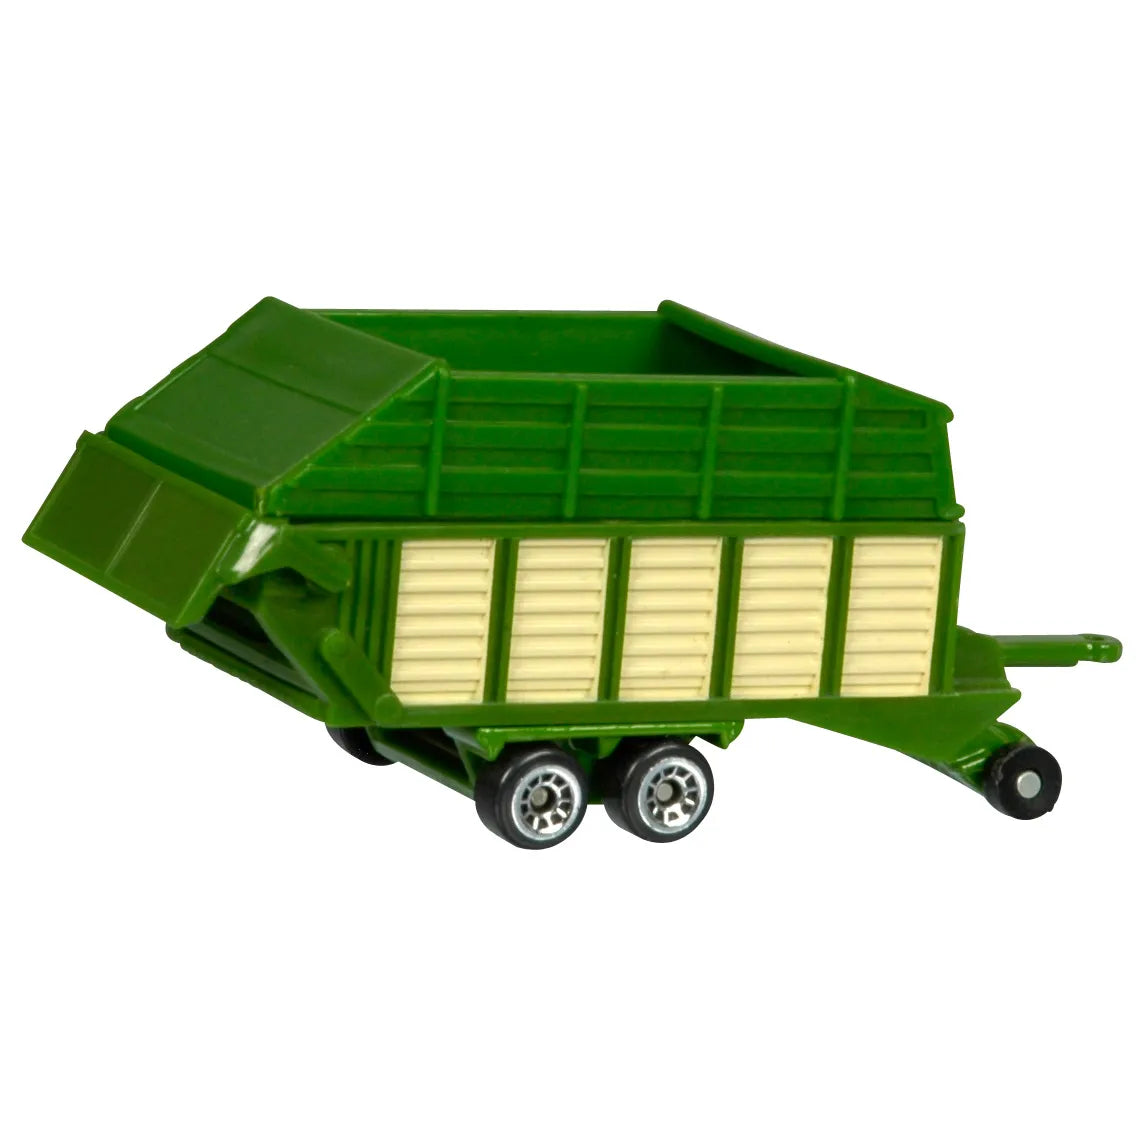 Siku 1:87 Gift Set - 5 Agricultural Vehicles